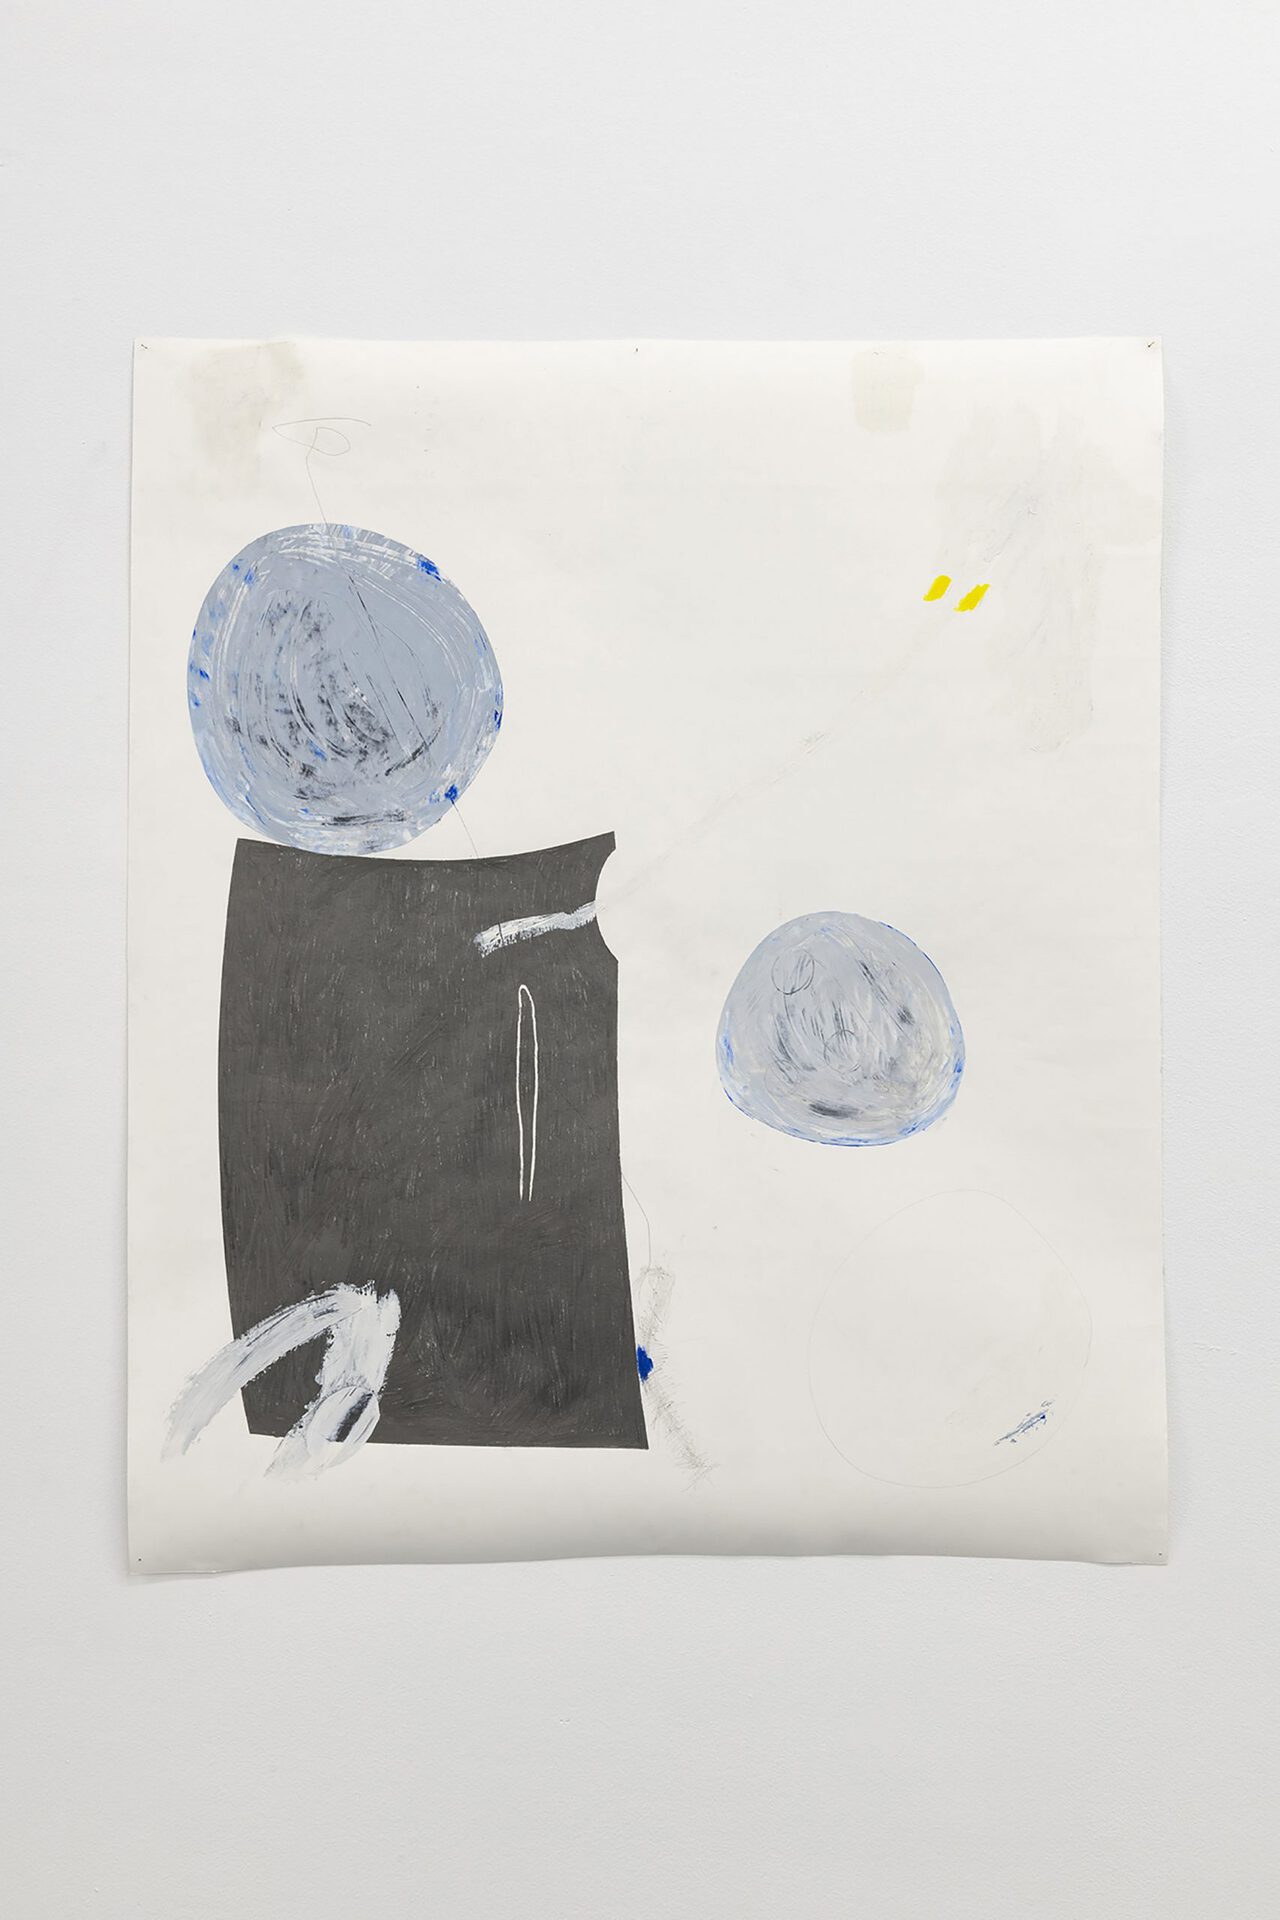 David Benarroch, uu20, 2021, Oil stick and graphite on paper, 97 x 82 cm (Photo: Roberto Ruiz)